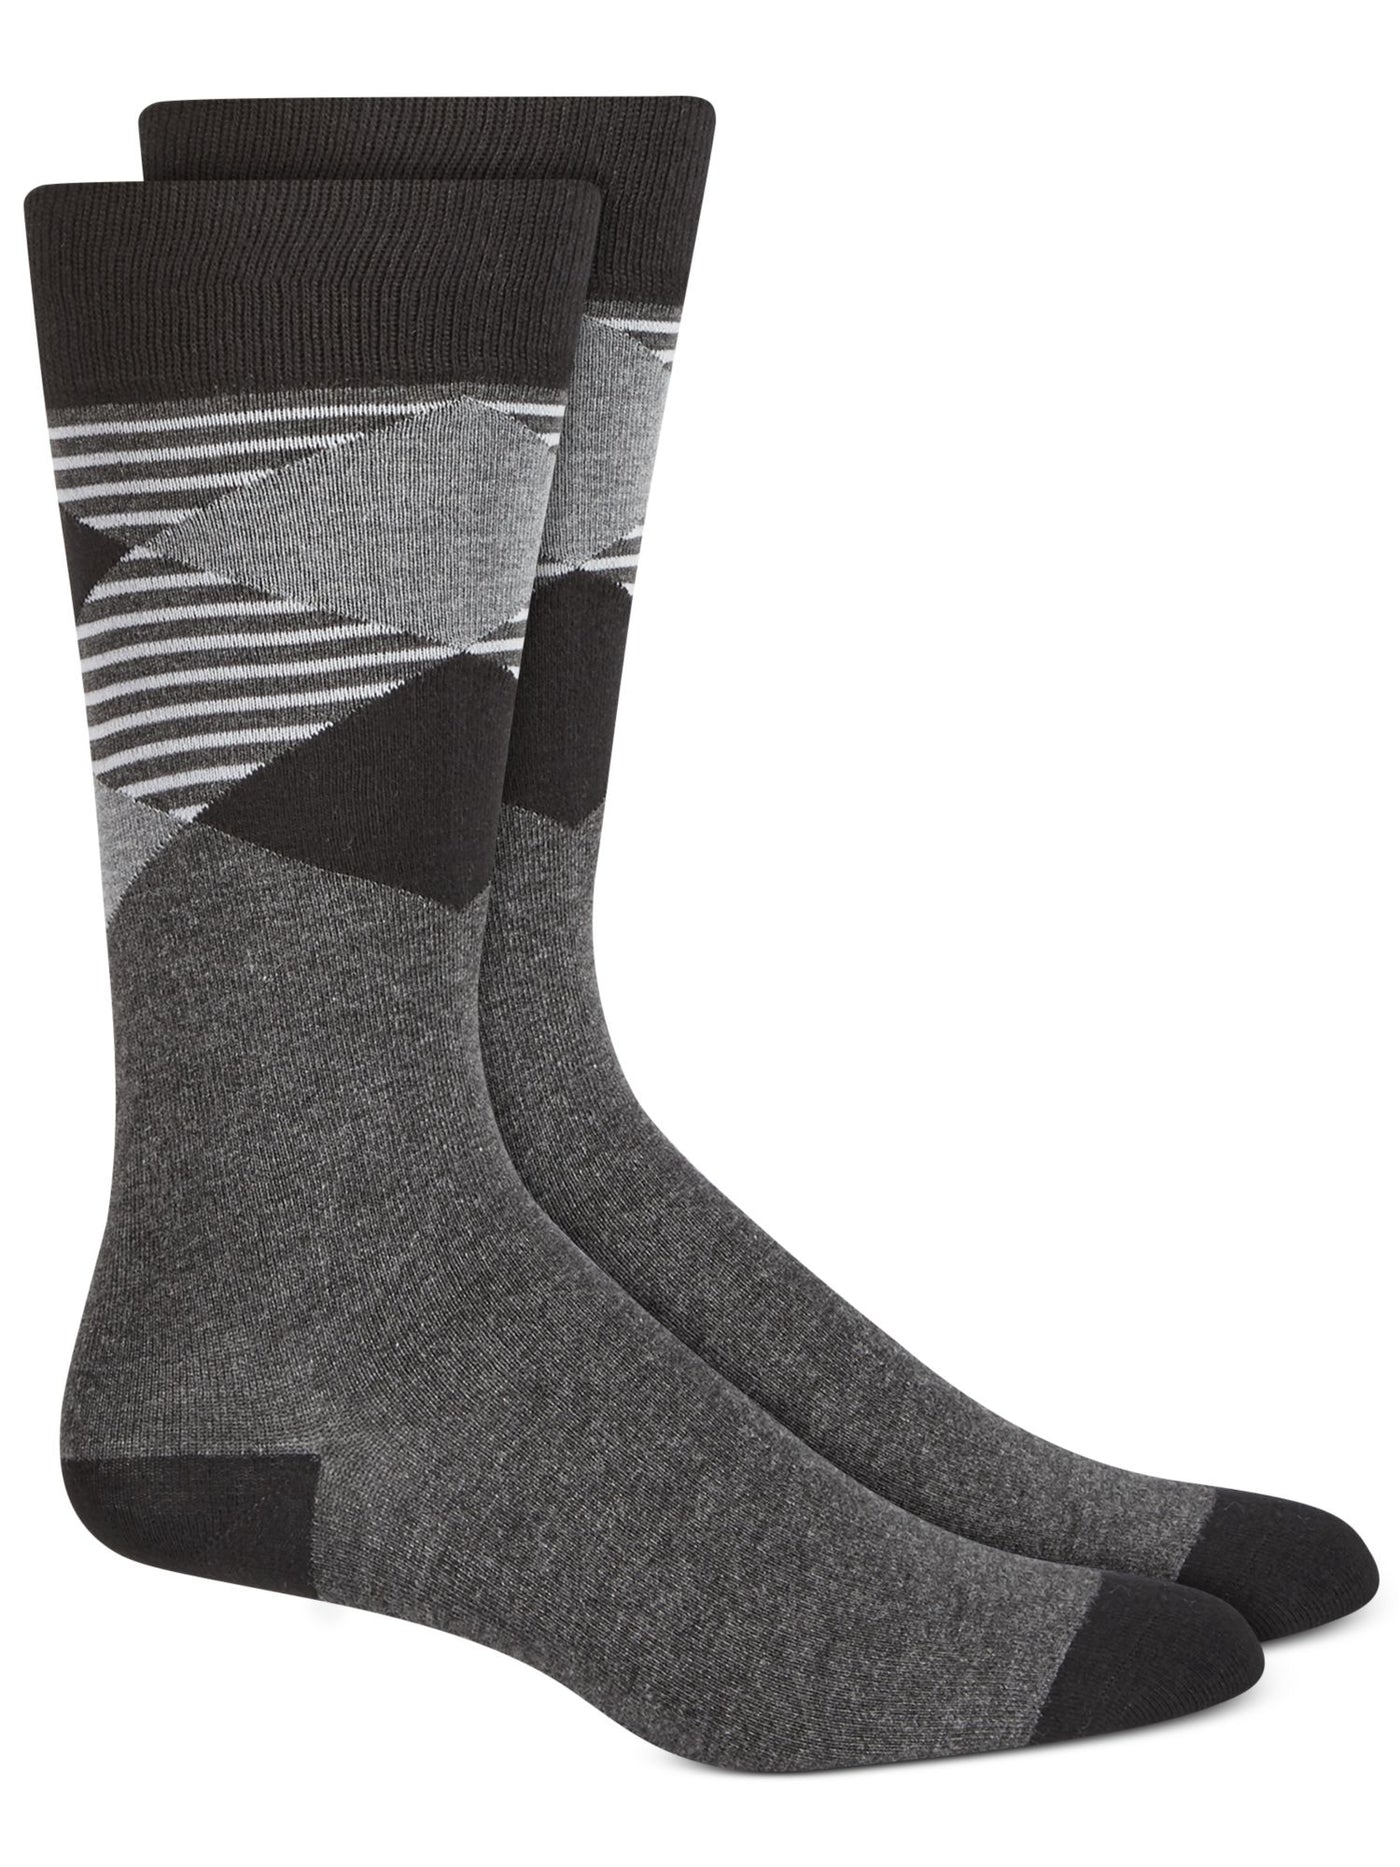 ALFATECH BY ALFANI Mens Gray Rayon Argyle Striped Moisture Wicking Seamless Casual Crew Socks 7-12